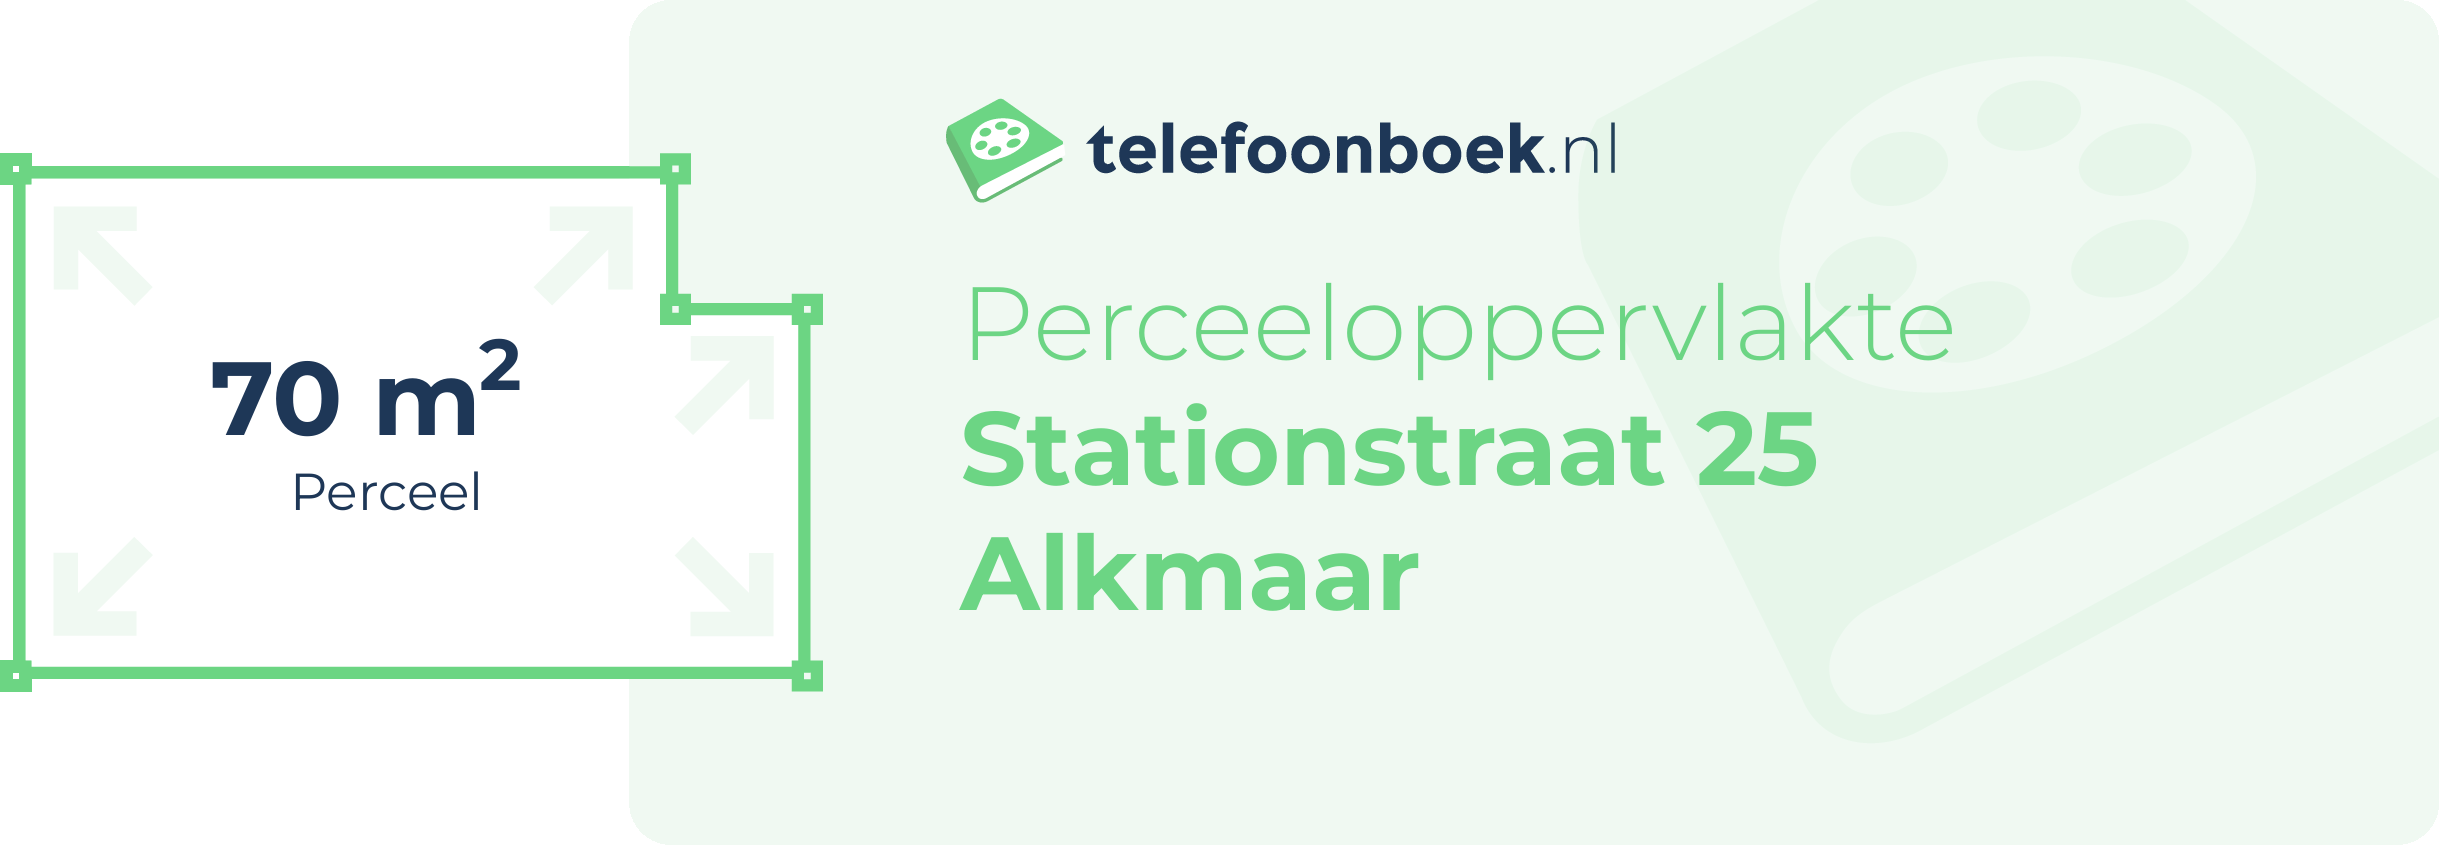 Perceeloppervlakte Stationstraat 25 Alkmaar